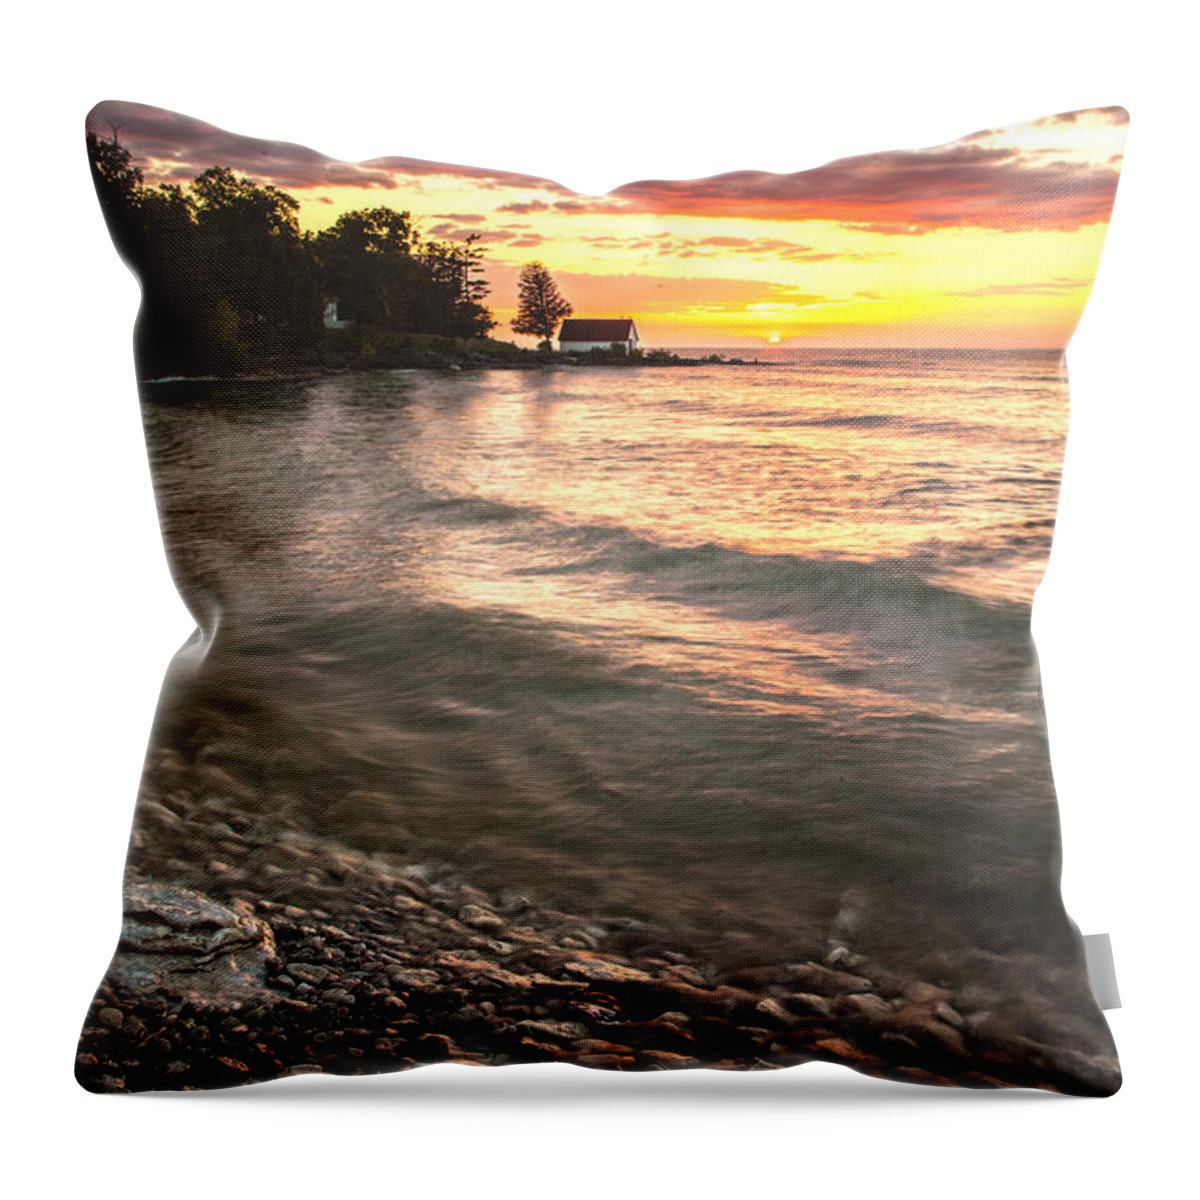  Washington Island Throw Pillow featuring the photograph Beach awakens by David Heilman